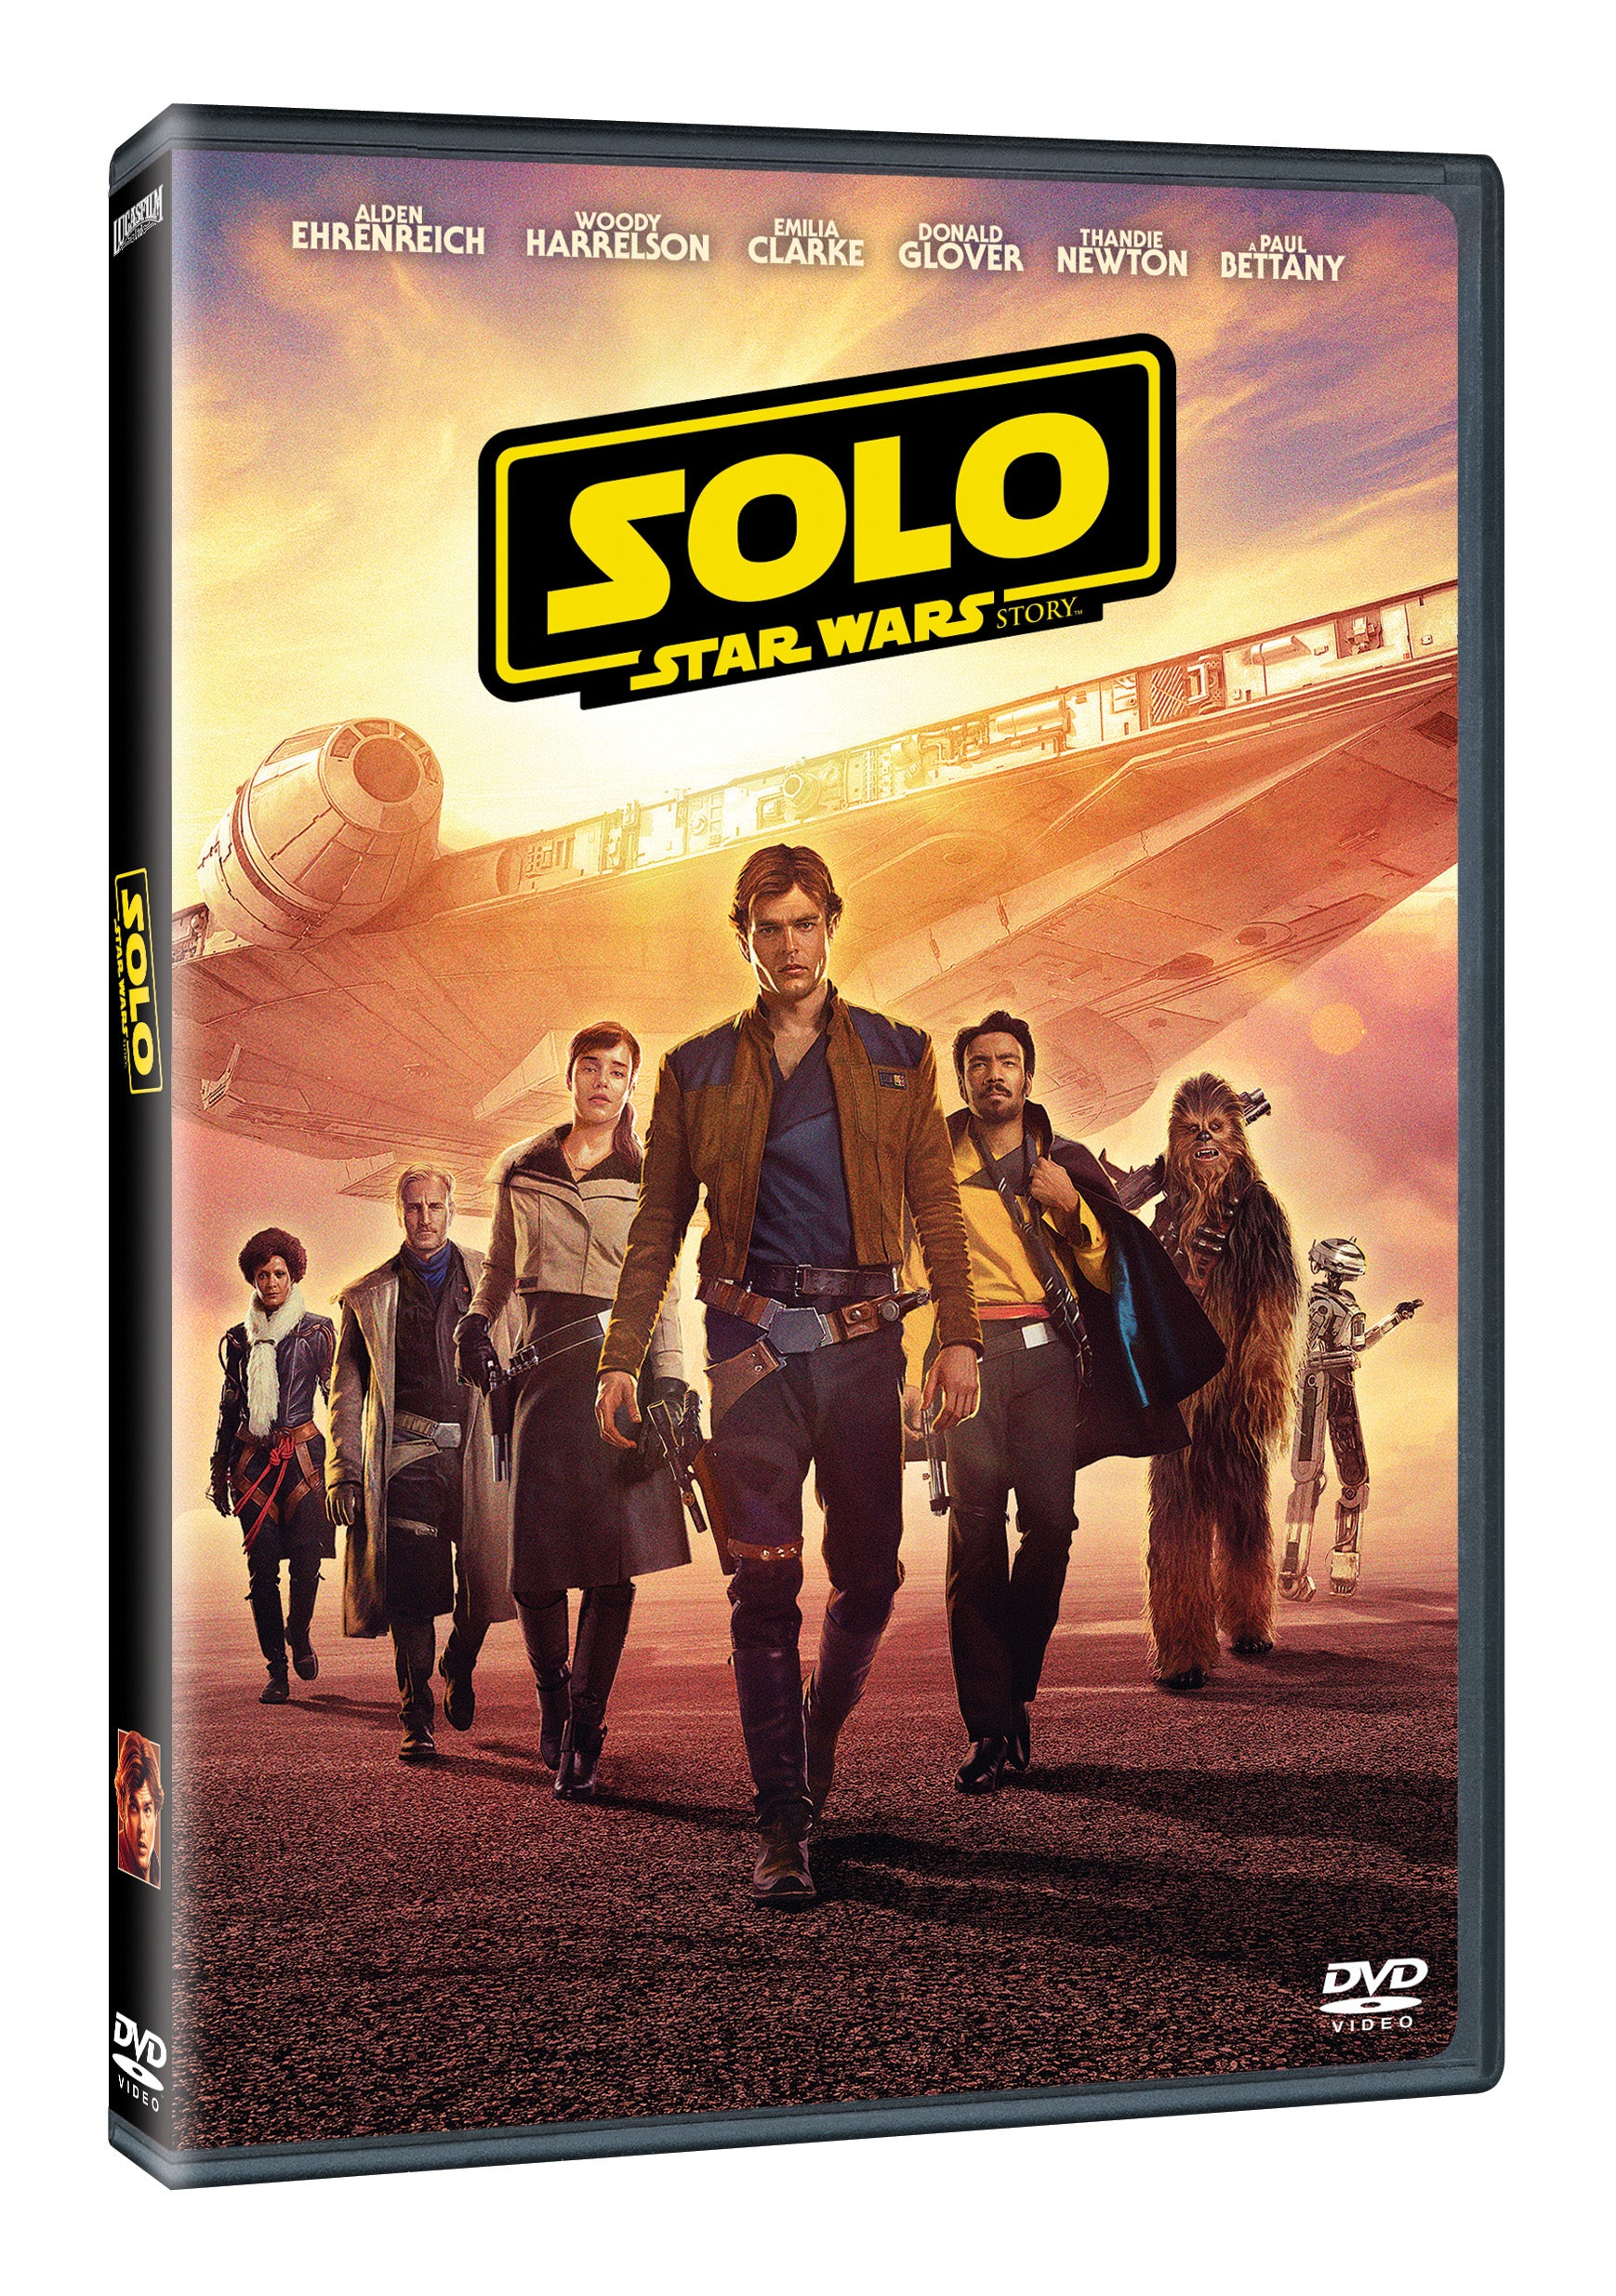 Solo: Star Wars Story DVD / Solo: Eine Star Wars Story